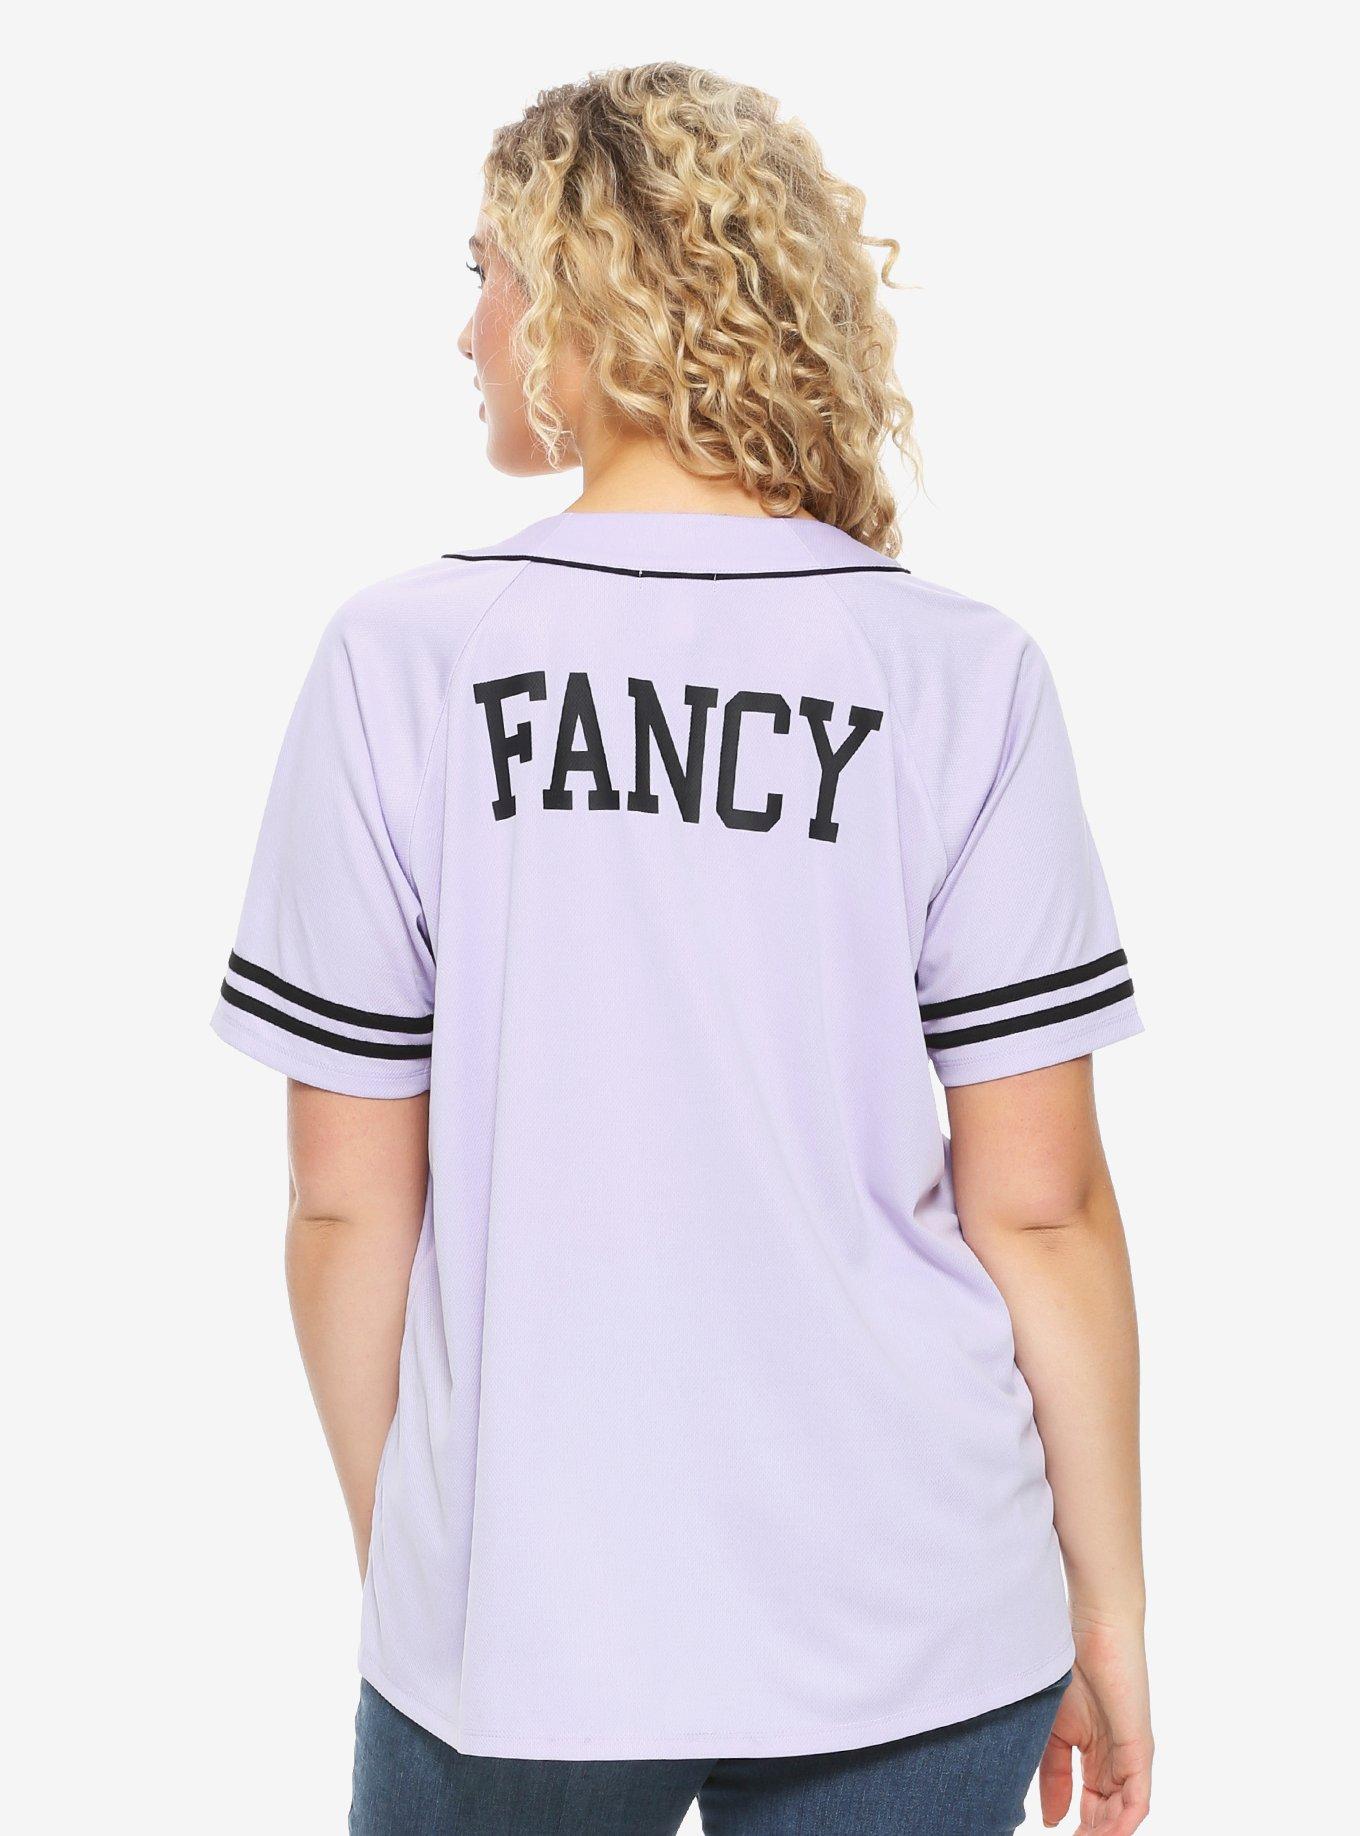 Lavender Caticorn Girls Baseball Jersey Plus Size, , alternate